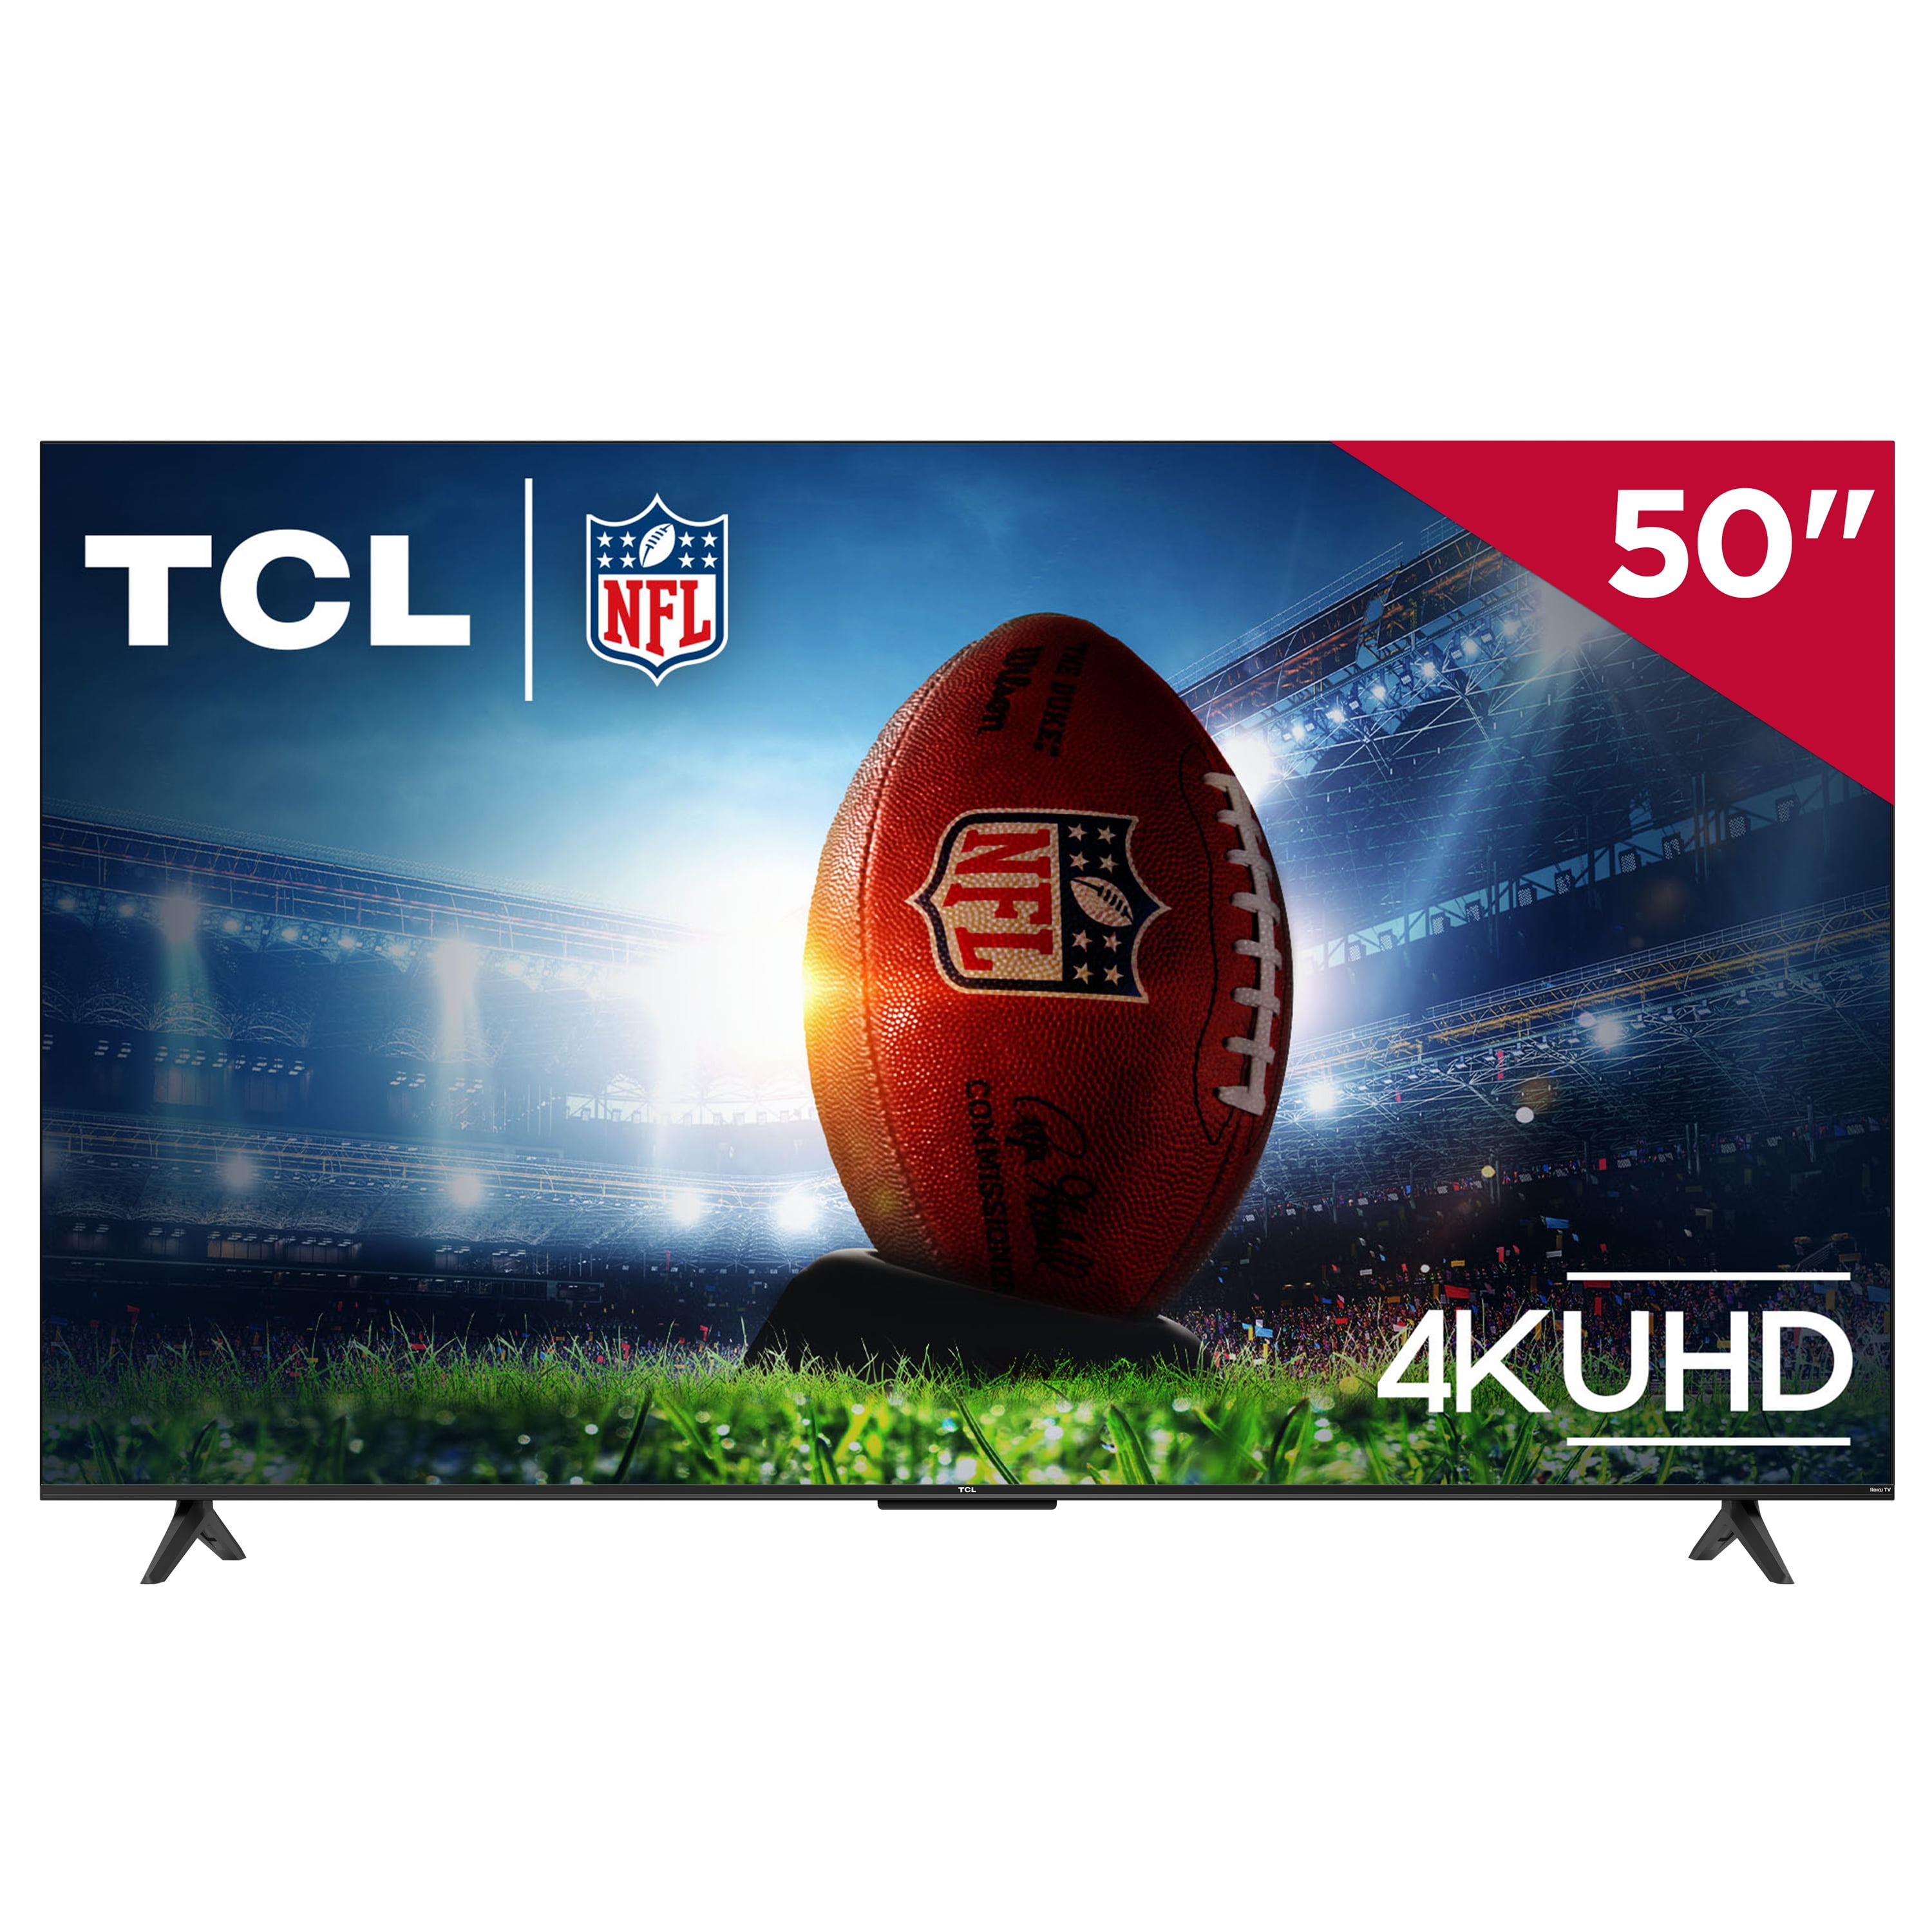 TCL 50” 4 Series 4K UHD HDR Smart Roku TV Review 